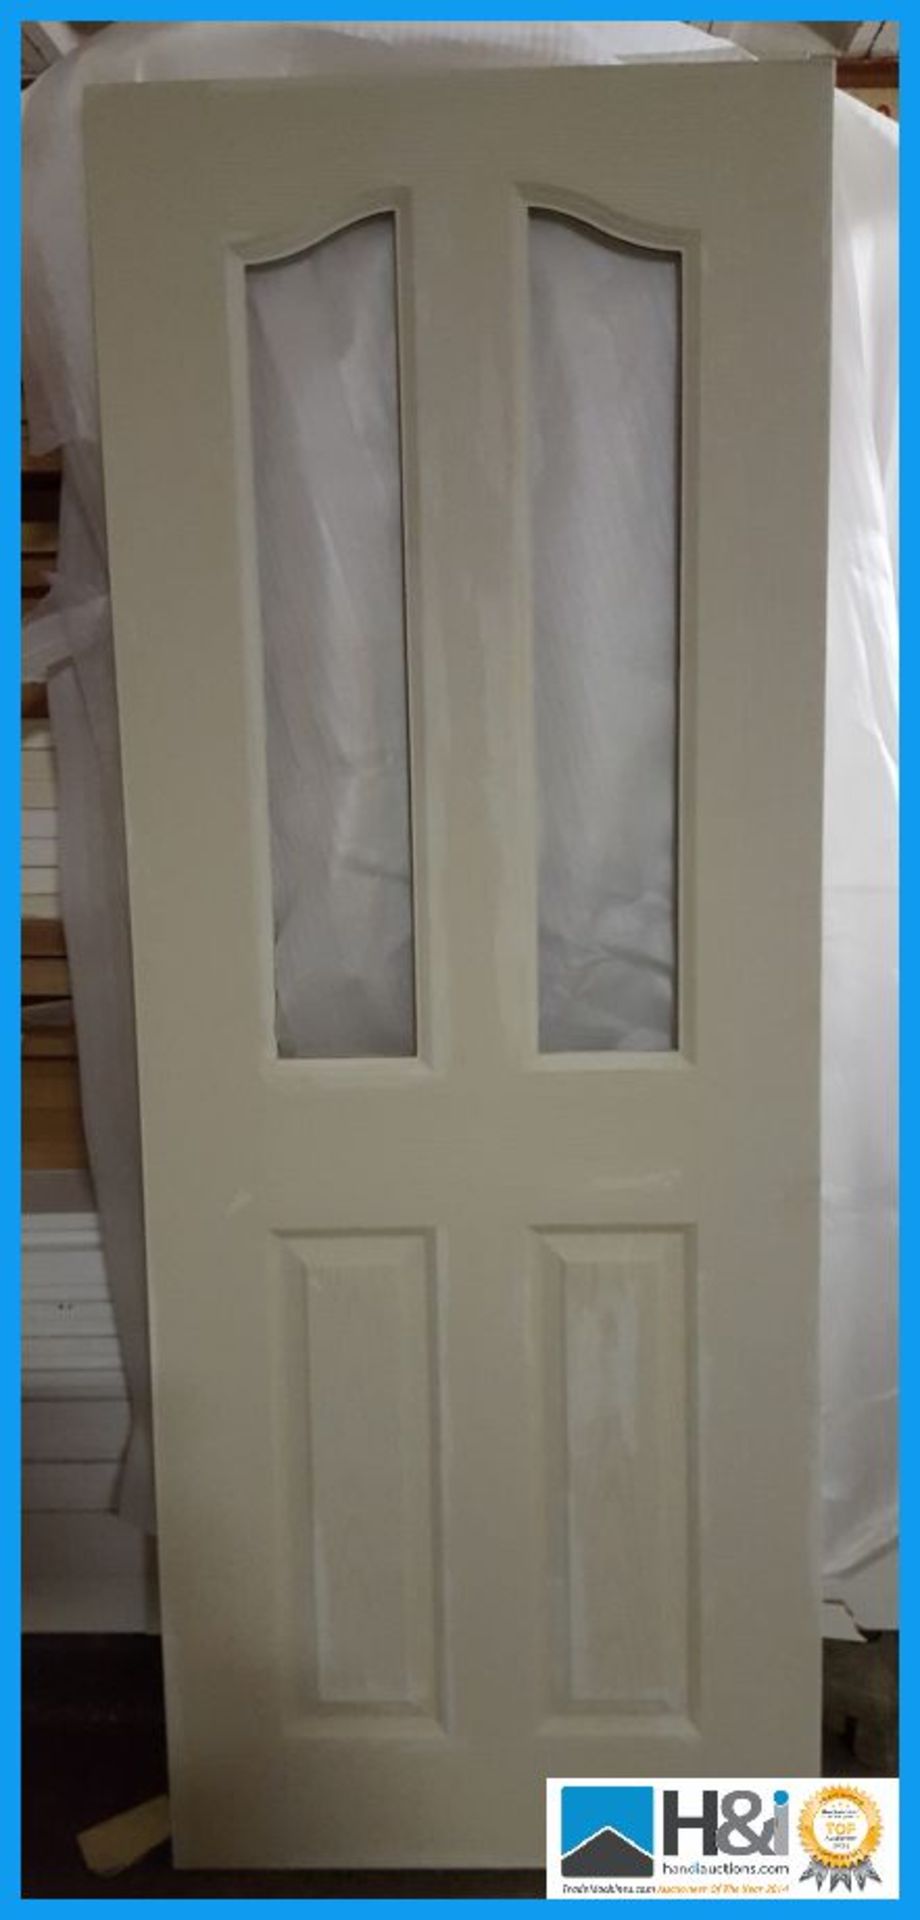 Carmel Glass (unglazed) interior door. Size: 78 x 30 inch. RRP £79.99. Appraisal: Viewing